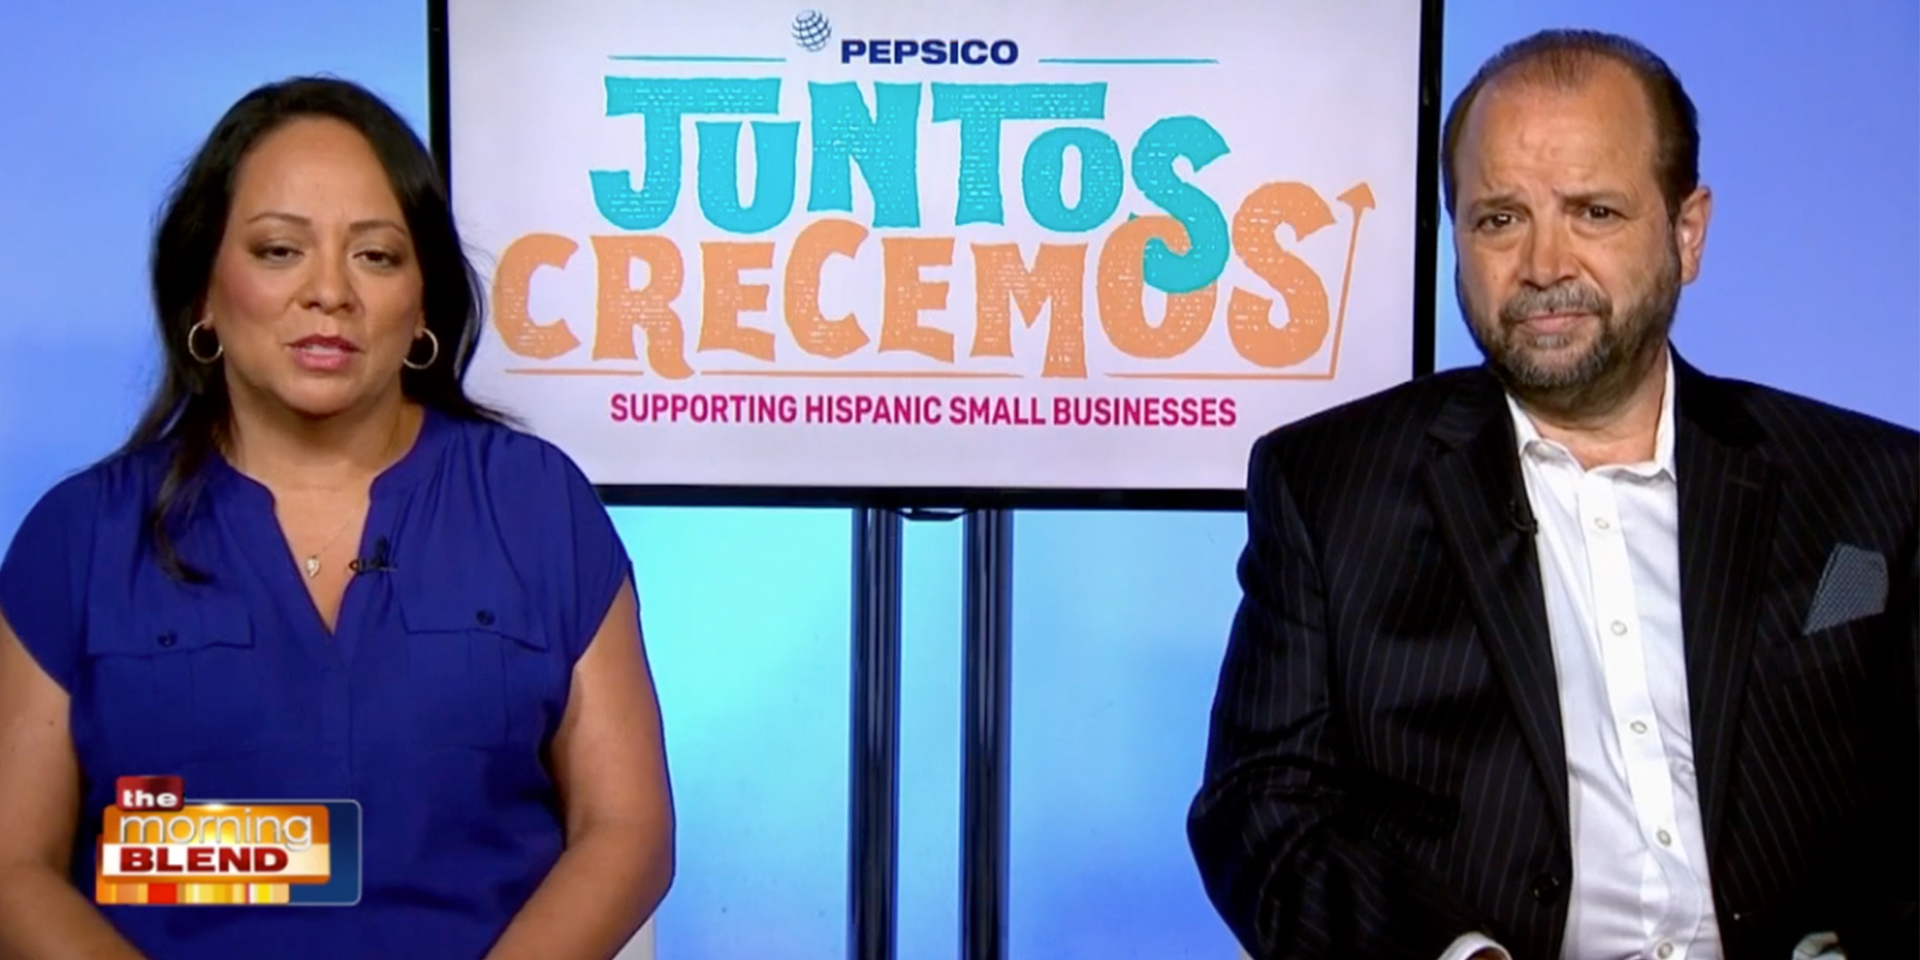 Pepsico Juntos Crecemos Logo between a man wearing suit and a woman in blue.